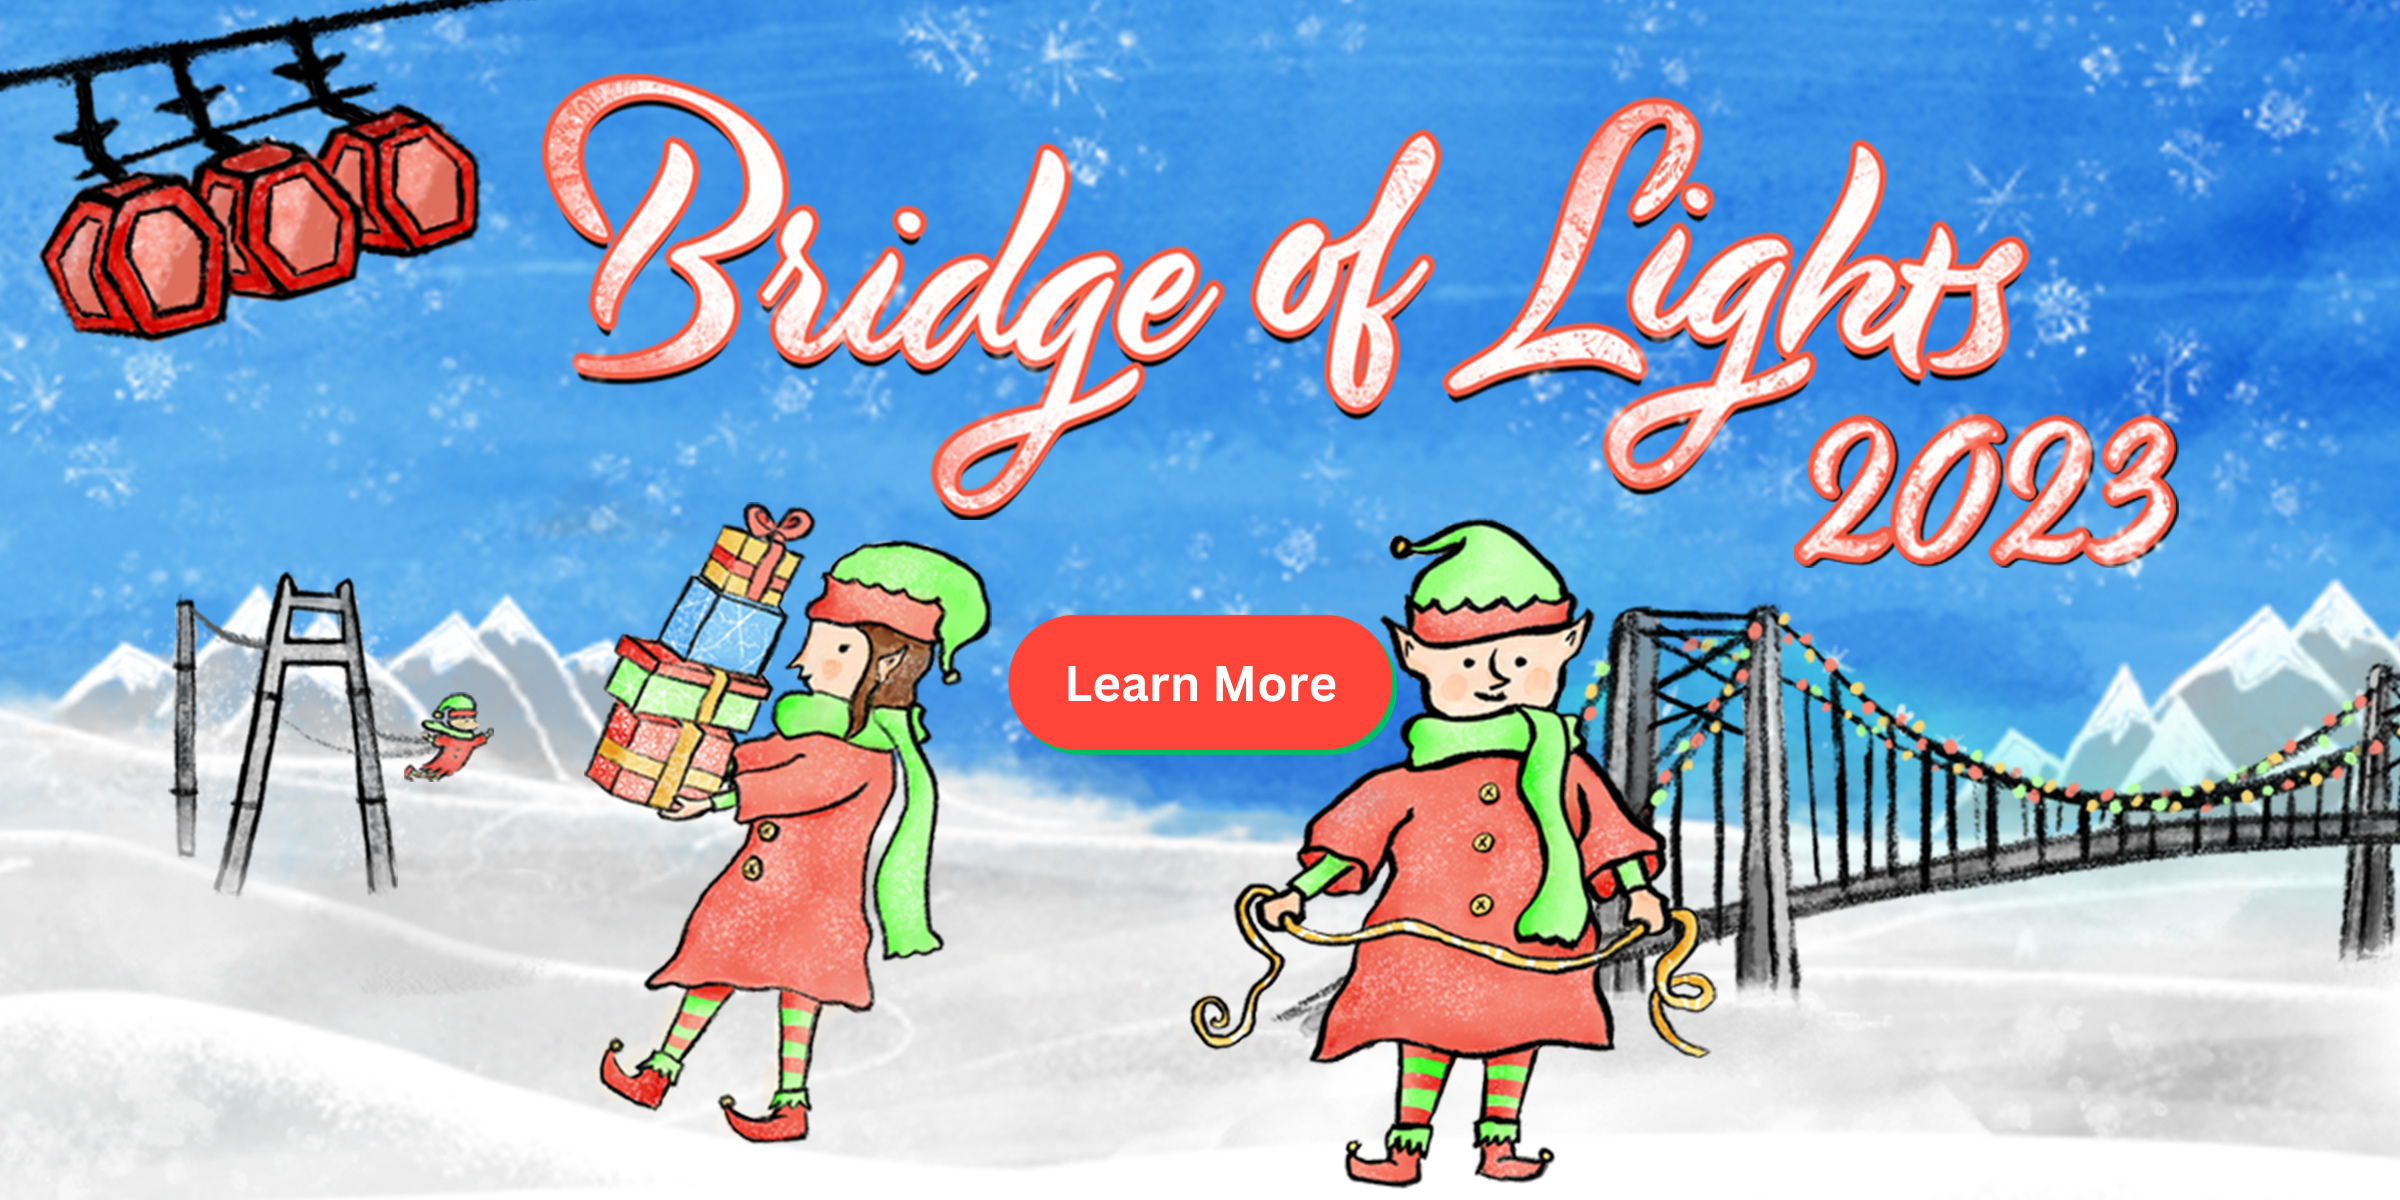 Learn Bridge Online: The Best Free Bridge Courses - Great Bridge Links